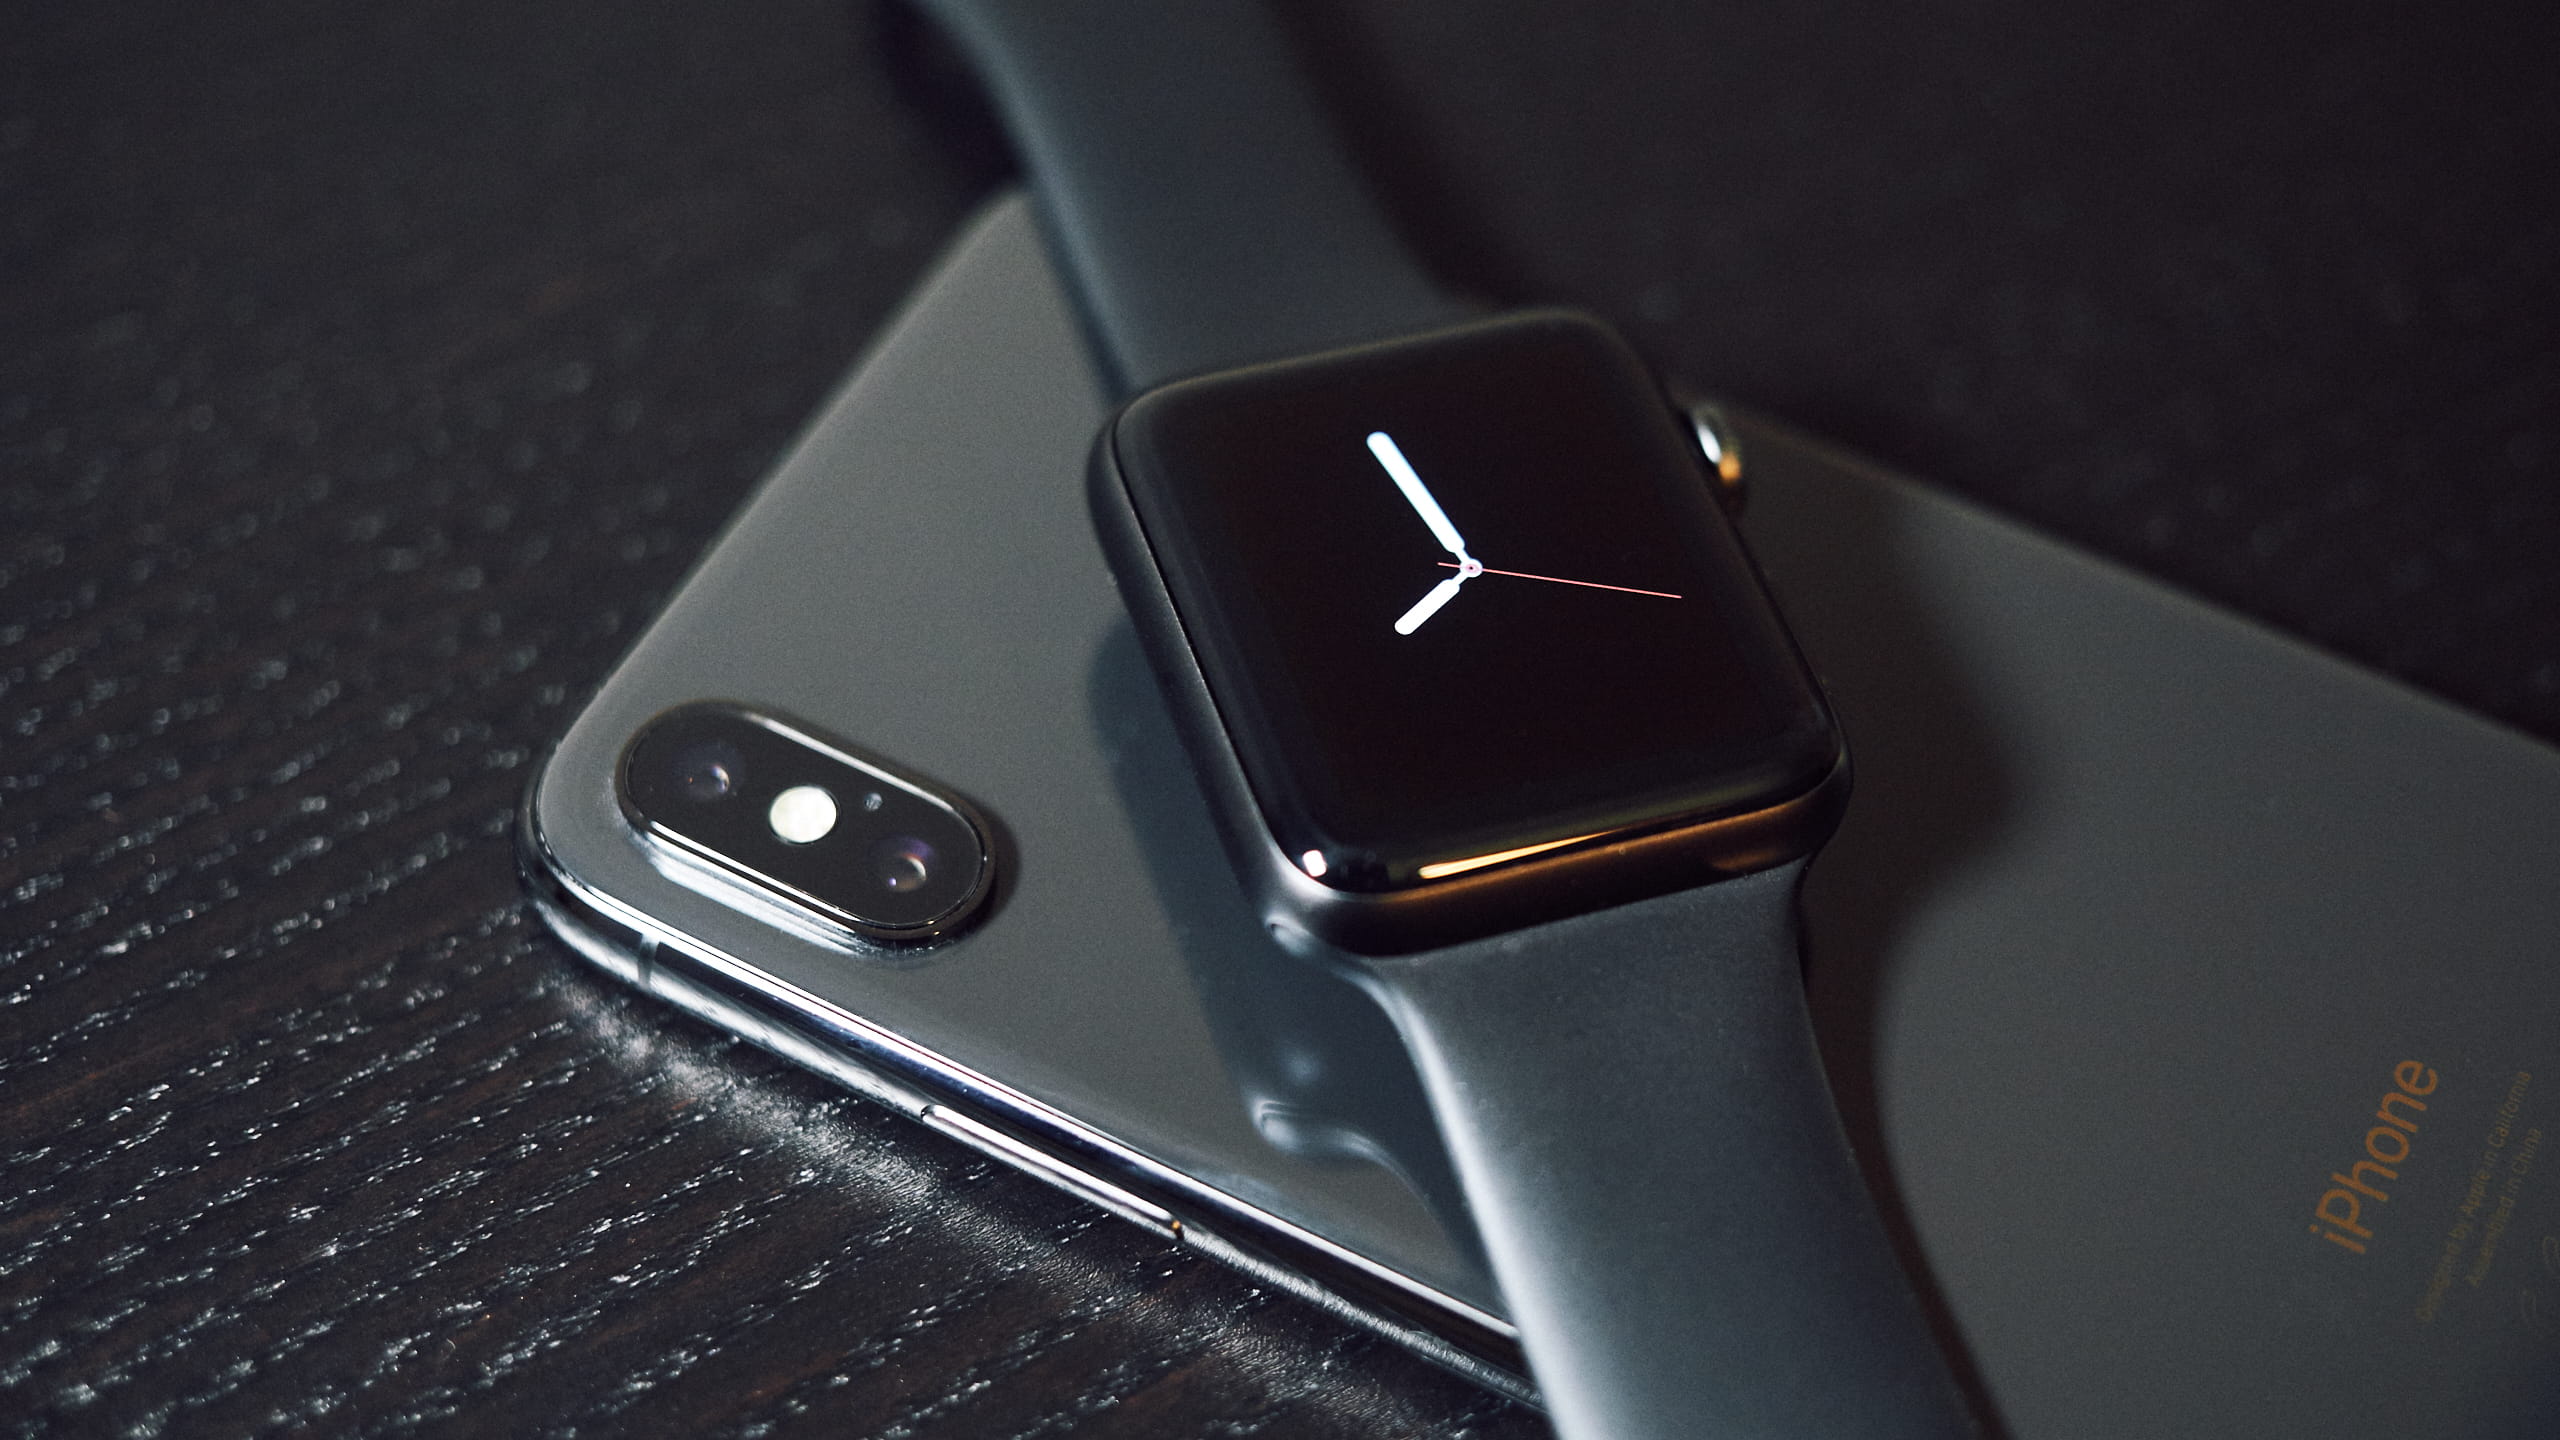 dark, minimalism, smartwatch, smartphone, detail, closeup, product